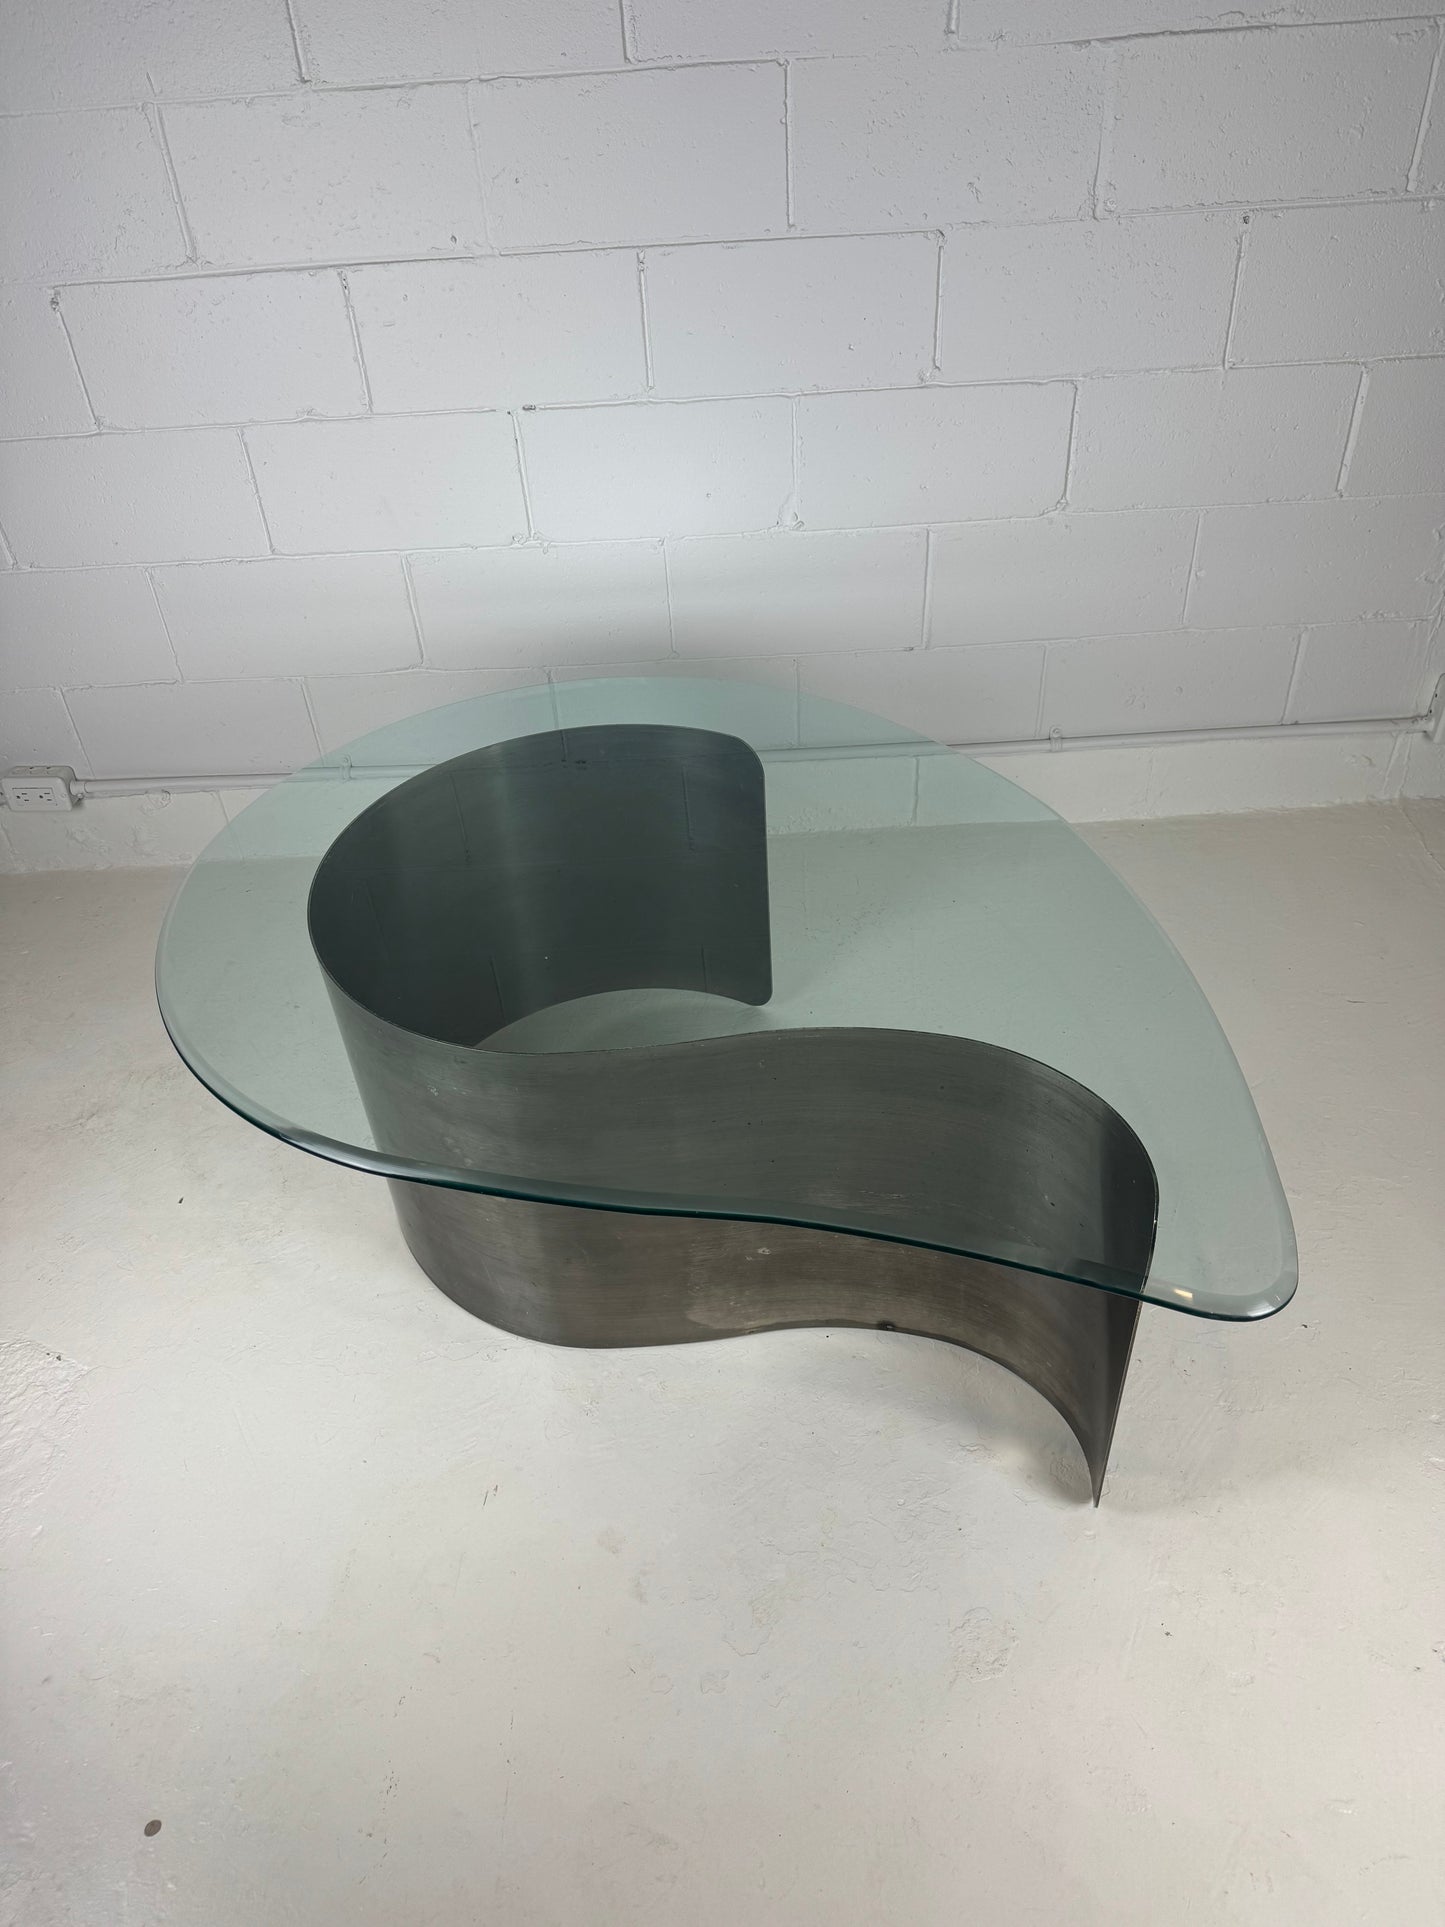 Sculptural Glass & Steel Teardrop Coffee Table Attributed to Karl Springer